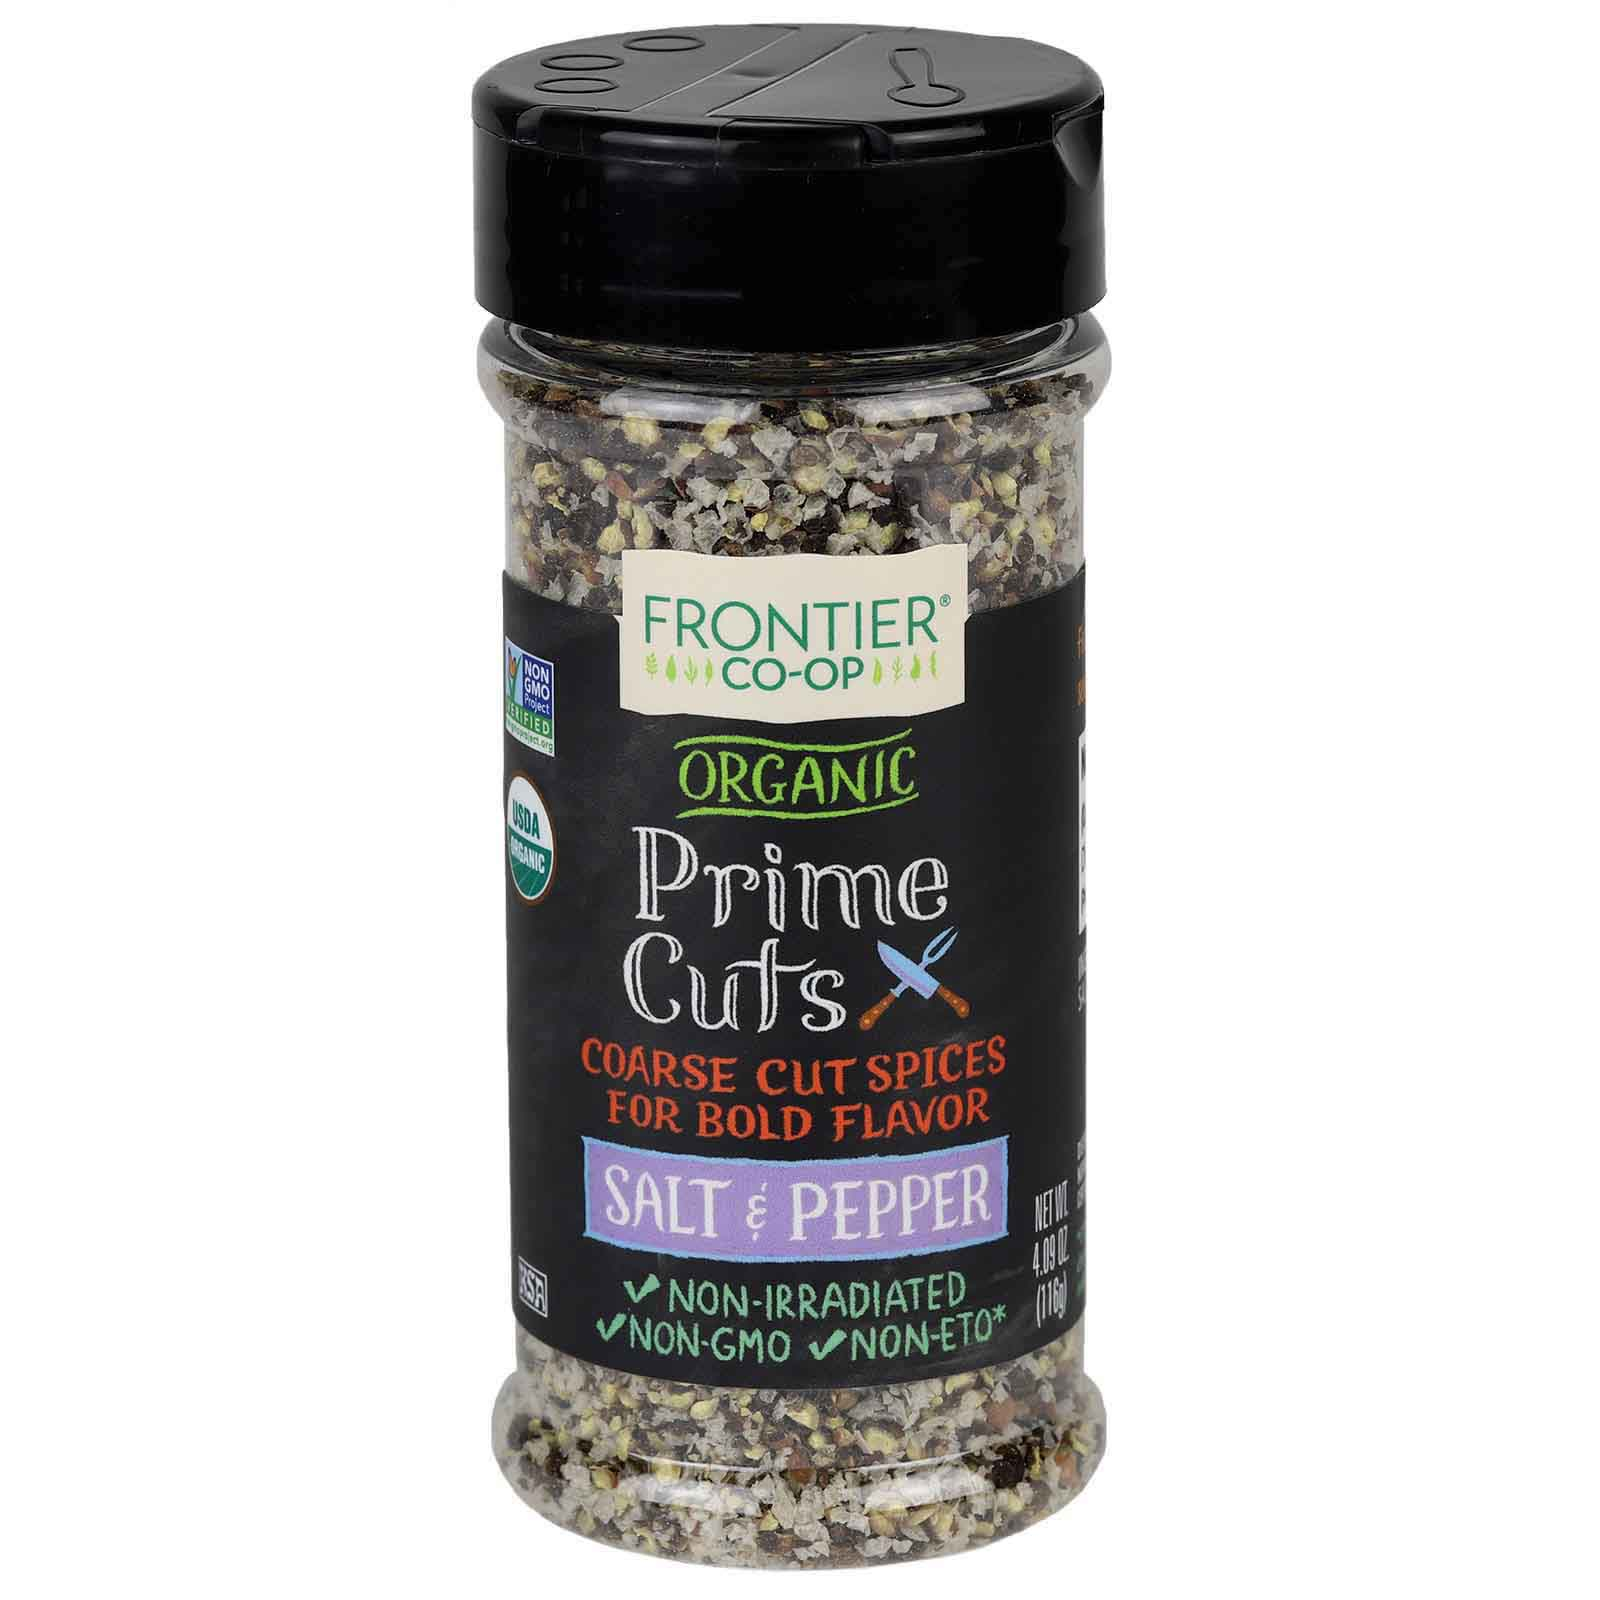 Frontier Co-op Prime Cuts Salt & Pepper, Organic 4.09 oz.